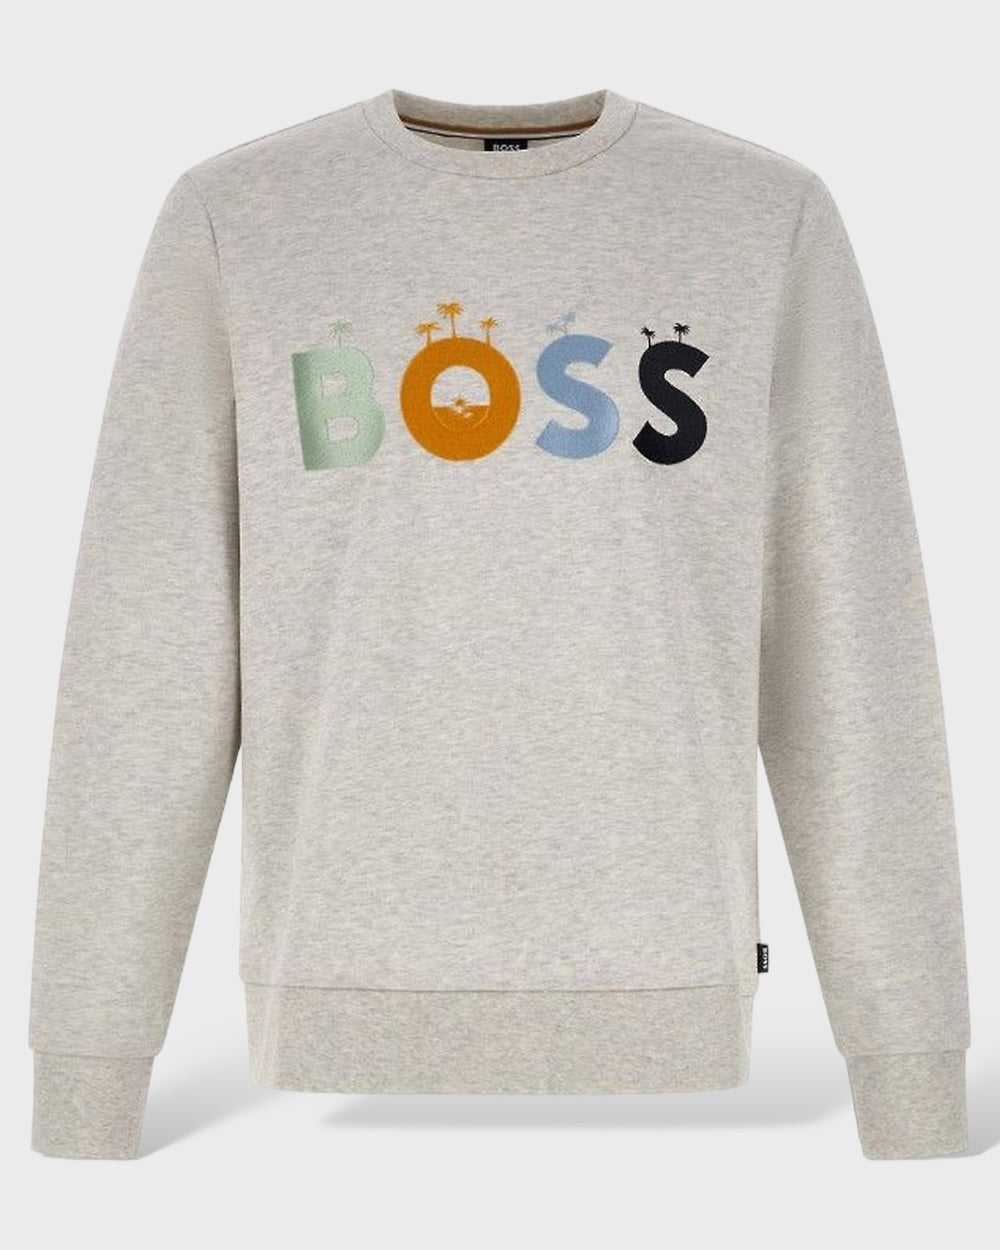 Hugo Boss Grey Cotton Logo Details Sweatshirt